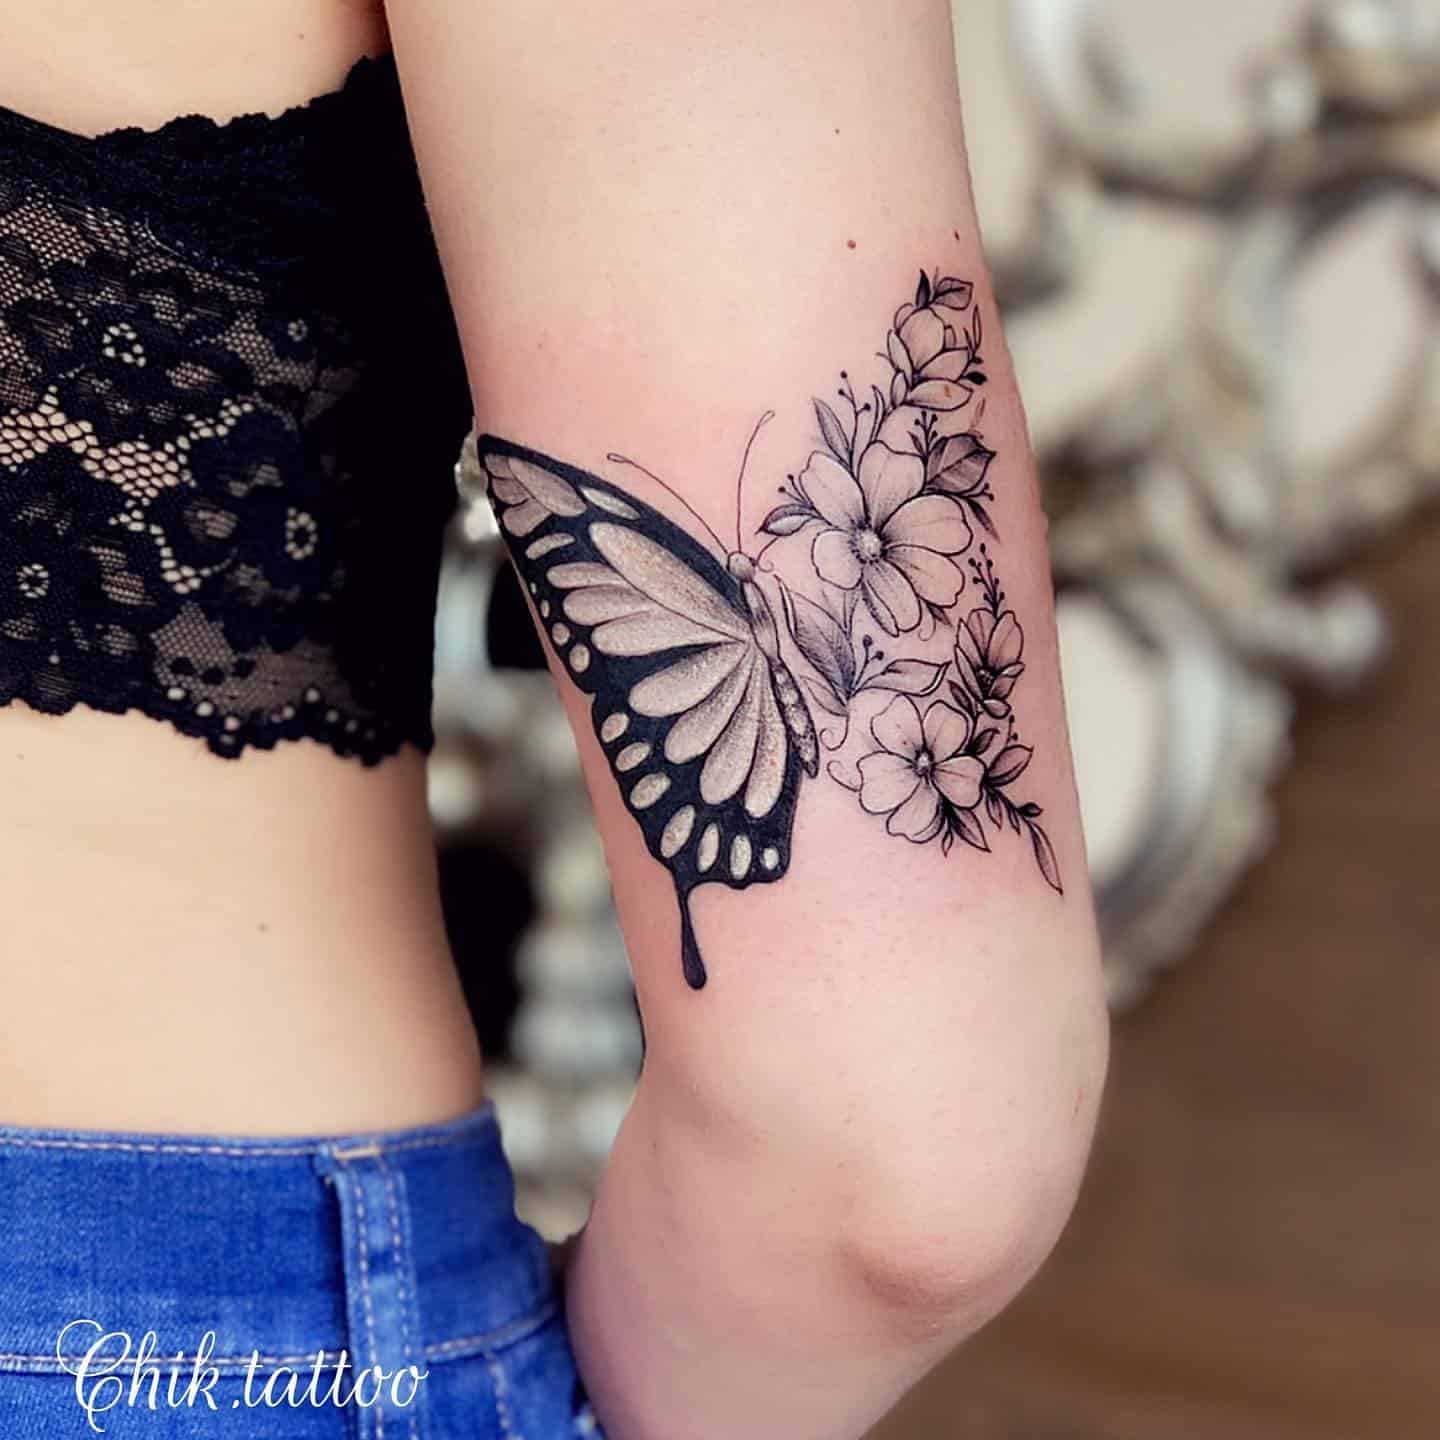 Trendy Arm Tattoo Ideas for Women